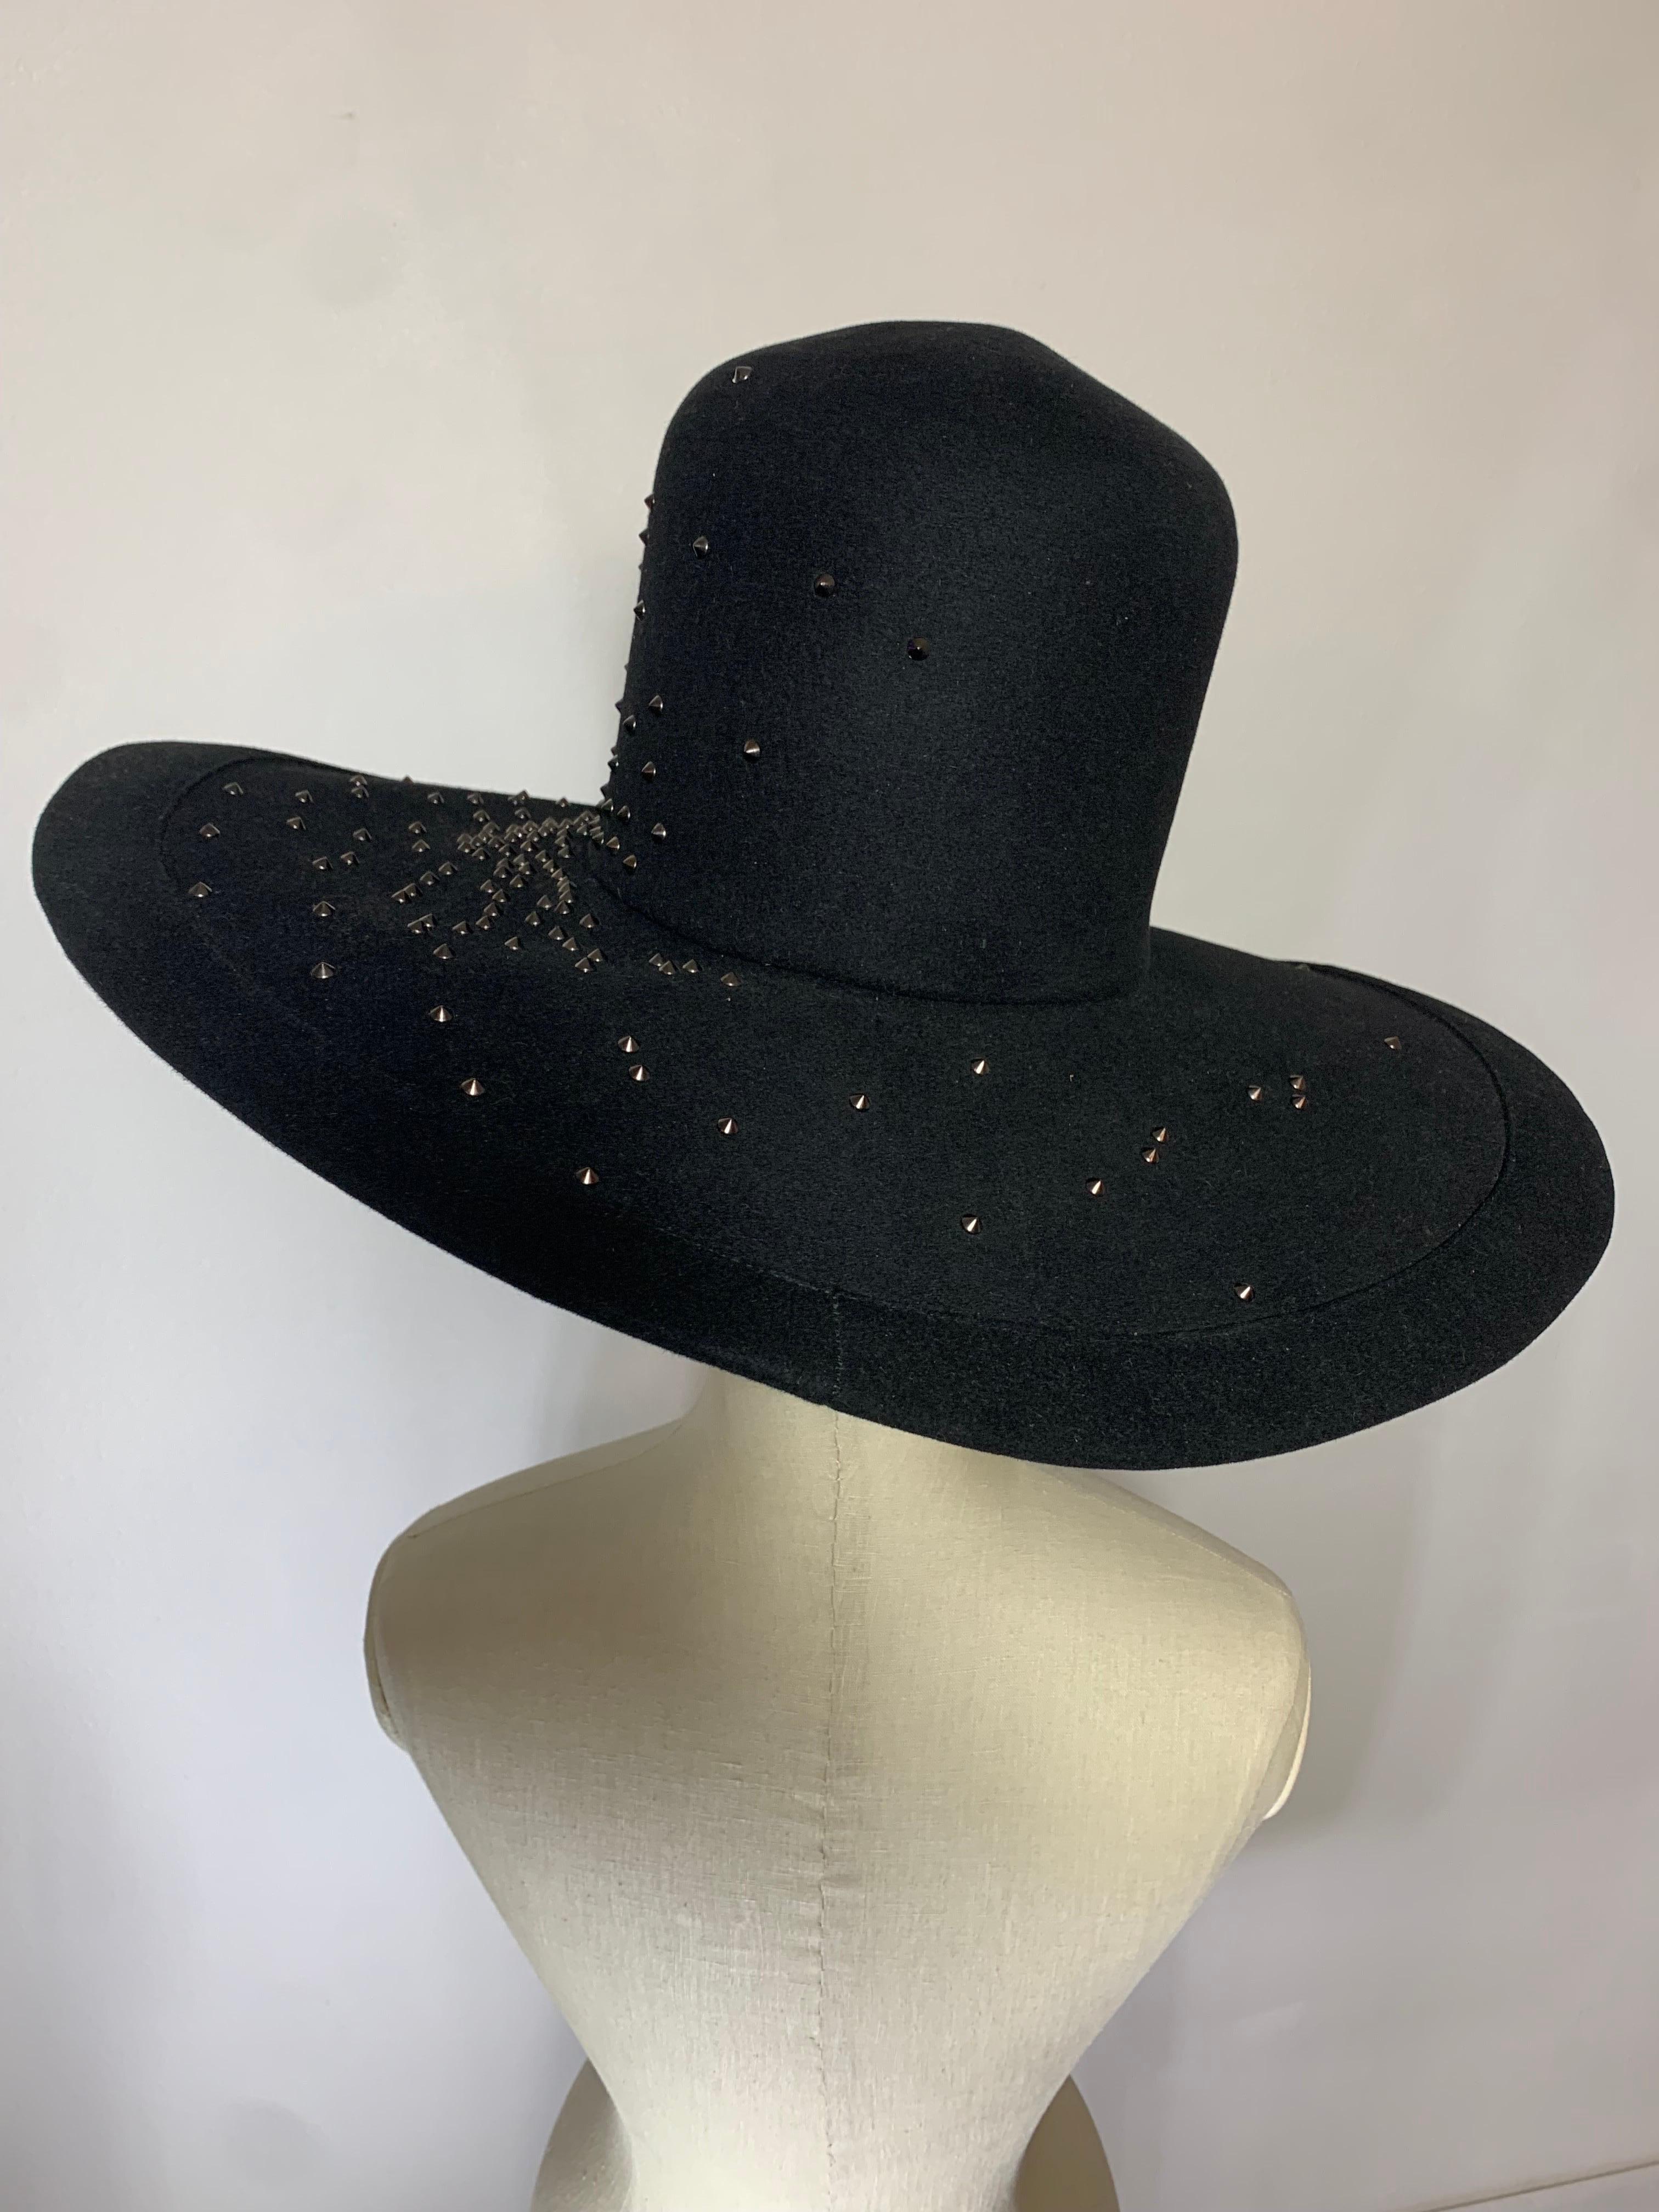 Maison Michel Black Large Brimmed Felt High Crown Hat w Studs & Camellia Flowers For Sale 3